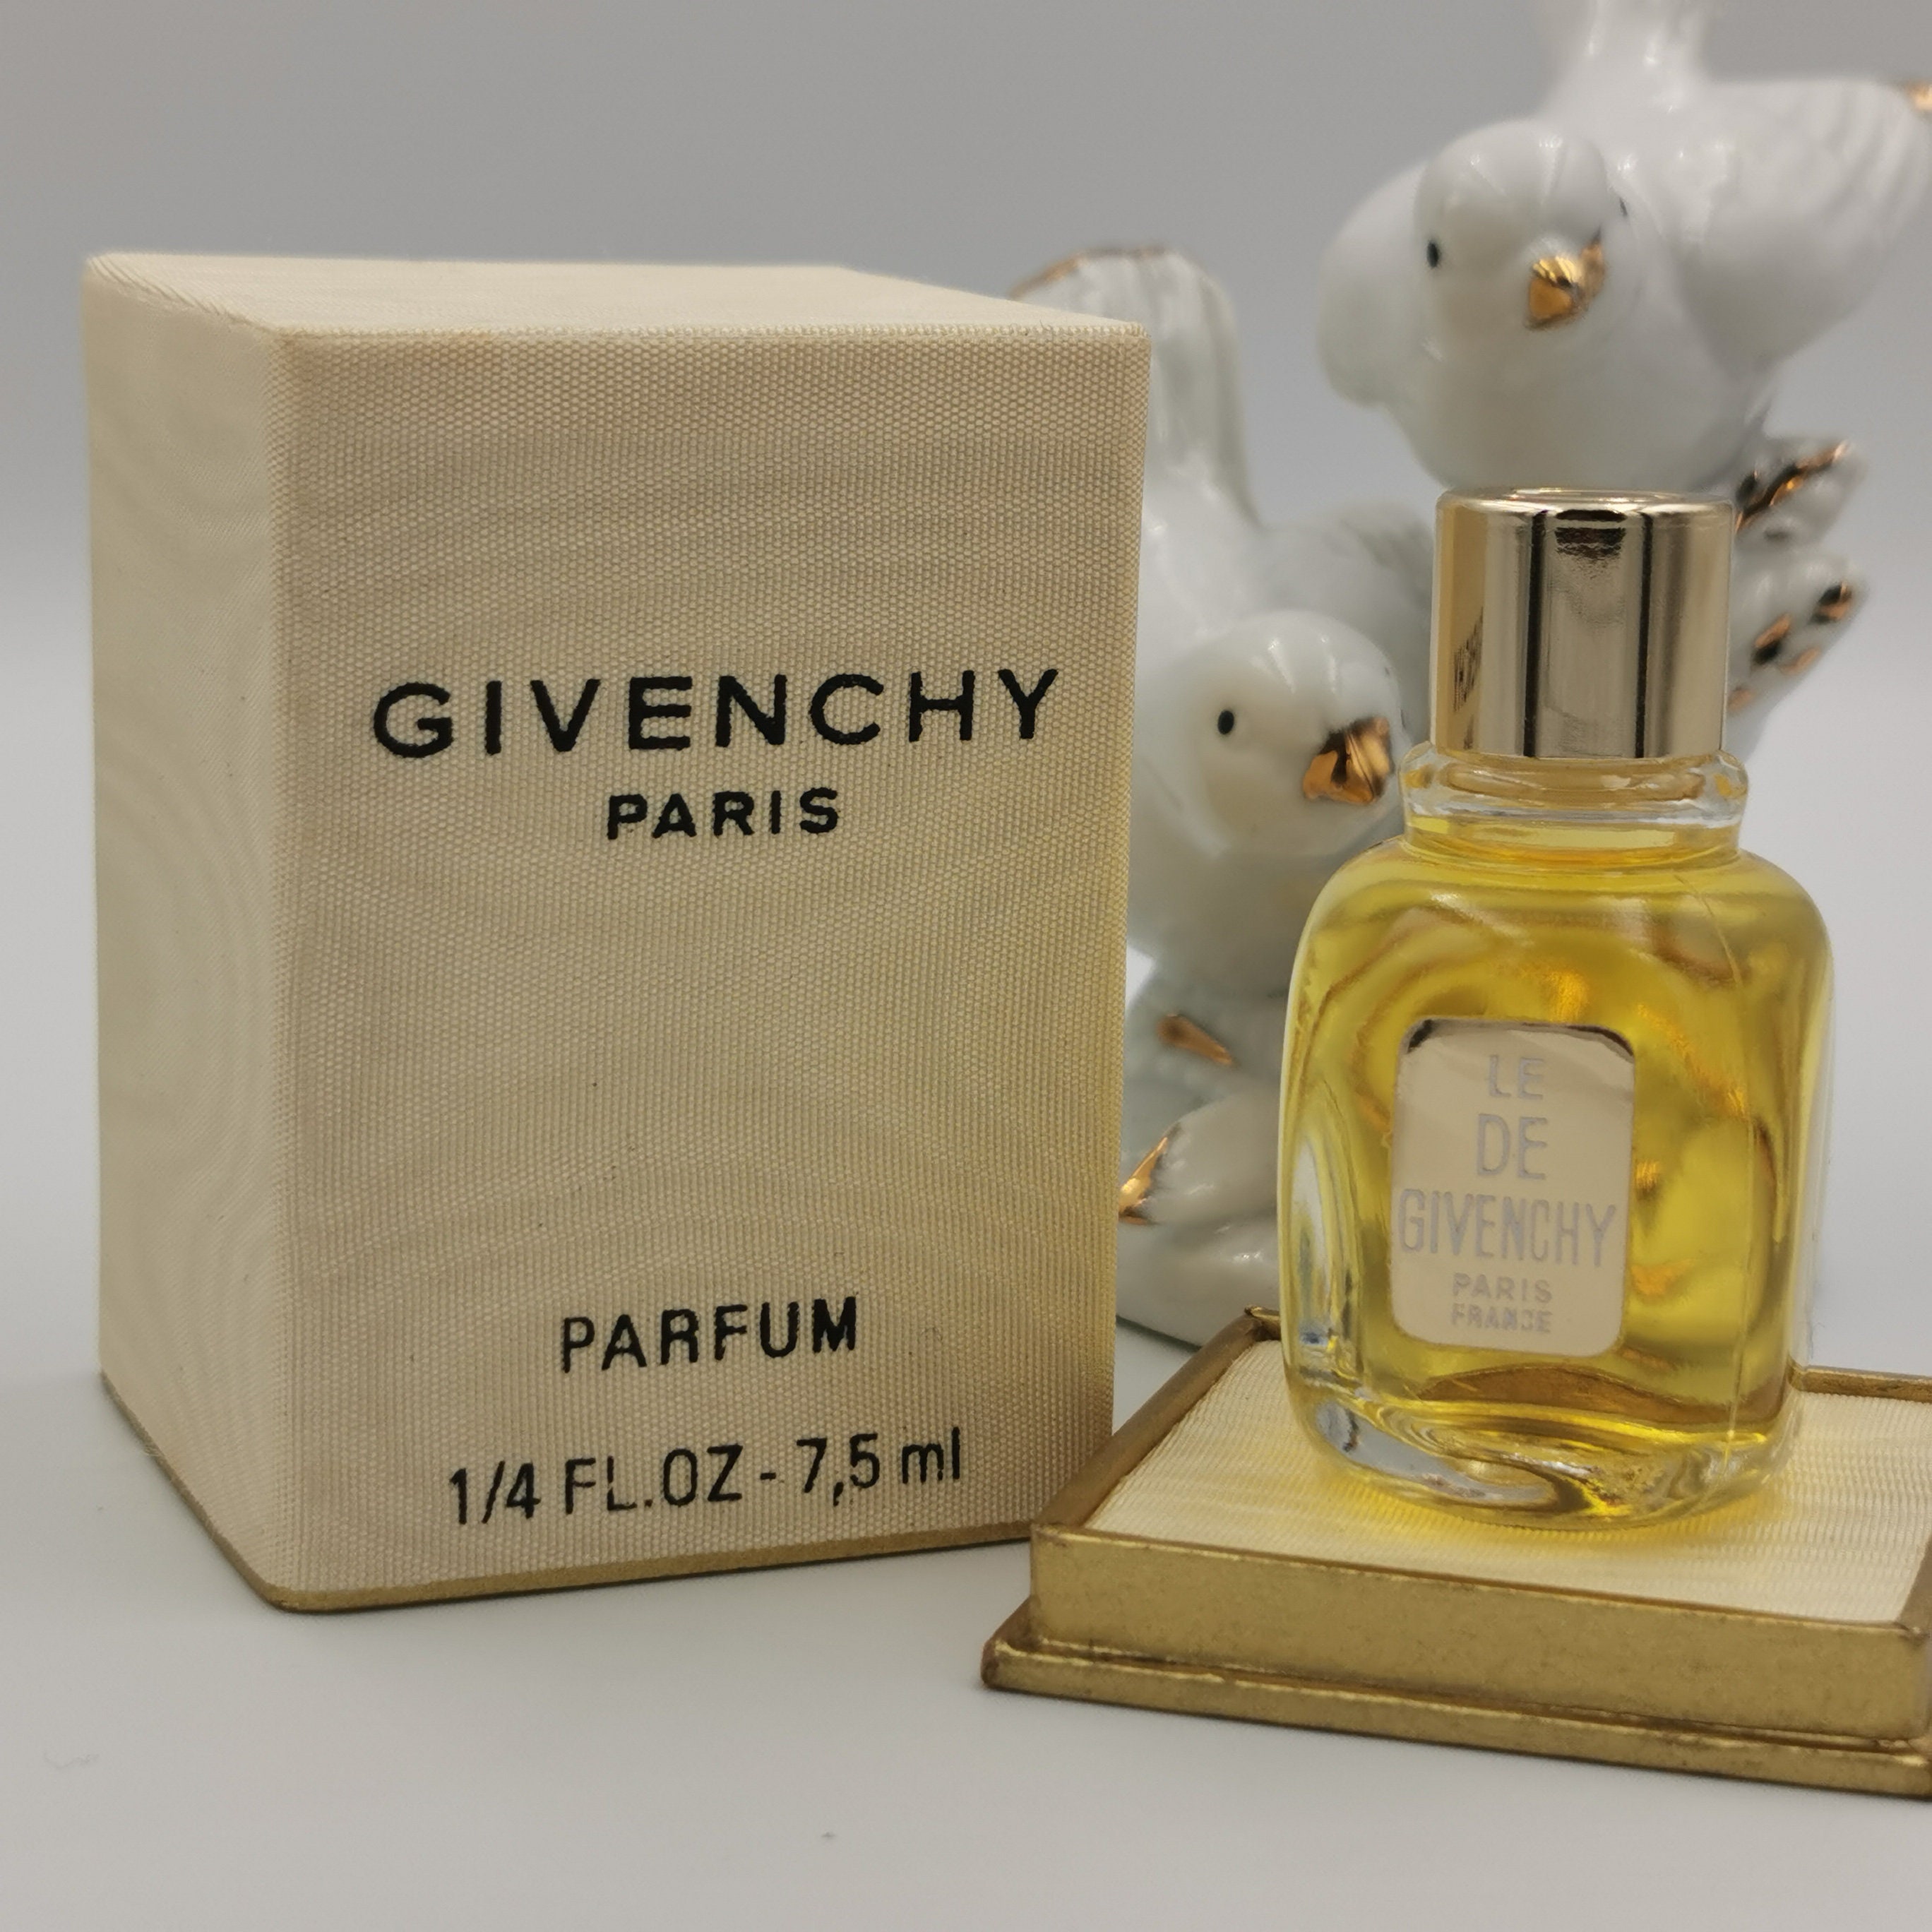 Le De Givenchy by Givenchy  PARFUM Splash VINTAGE - Etsy